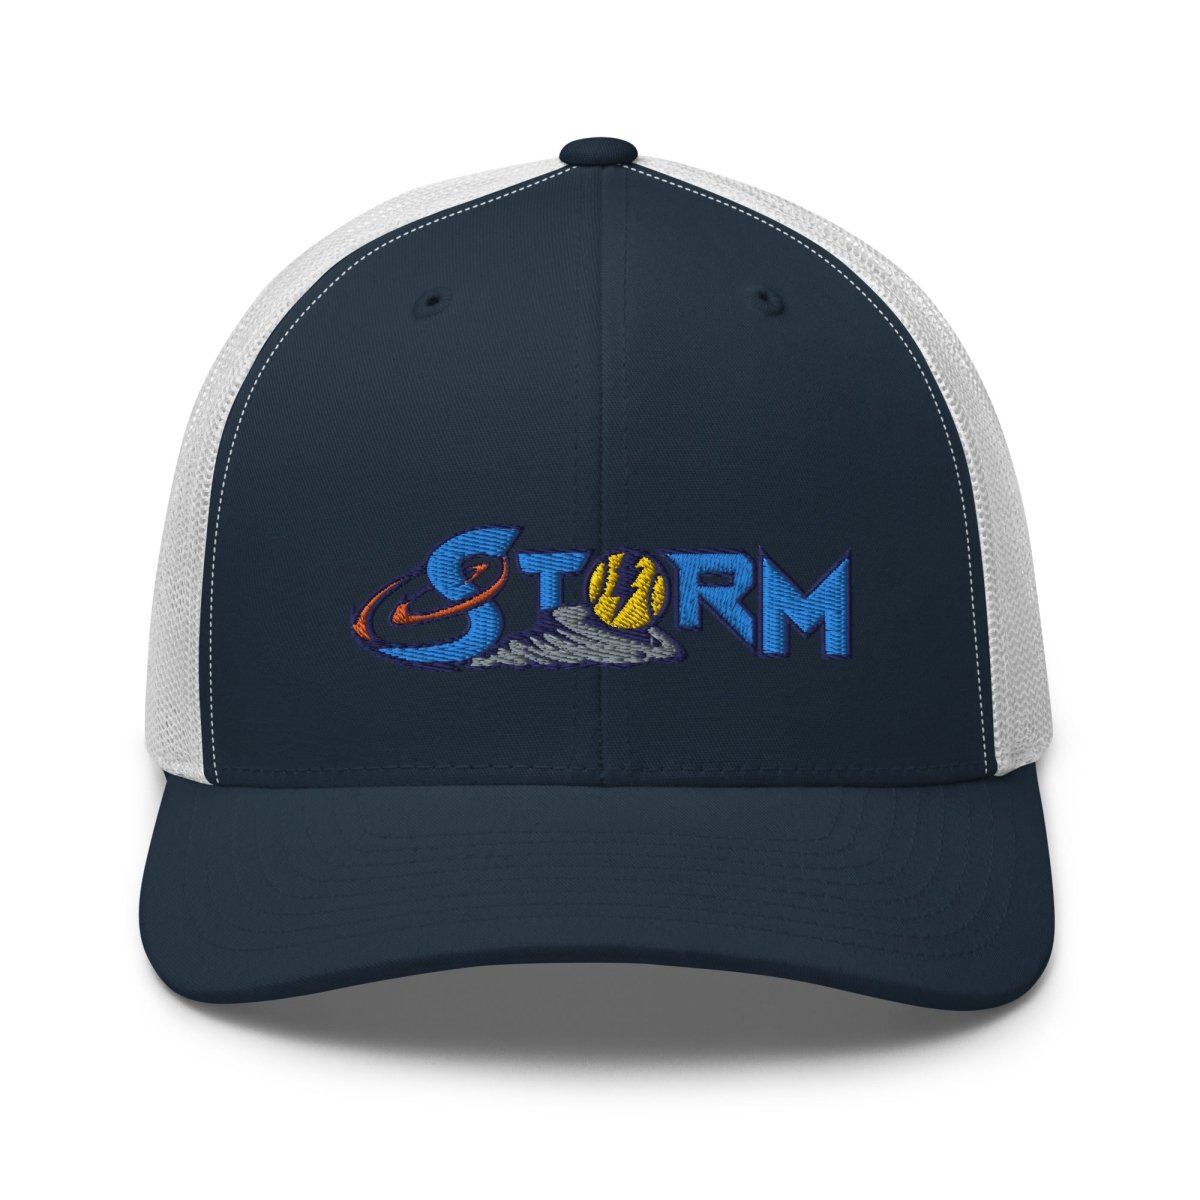 Storm Logo Trucker Cap